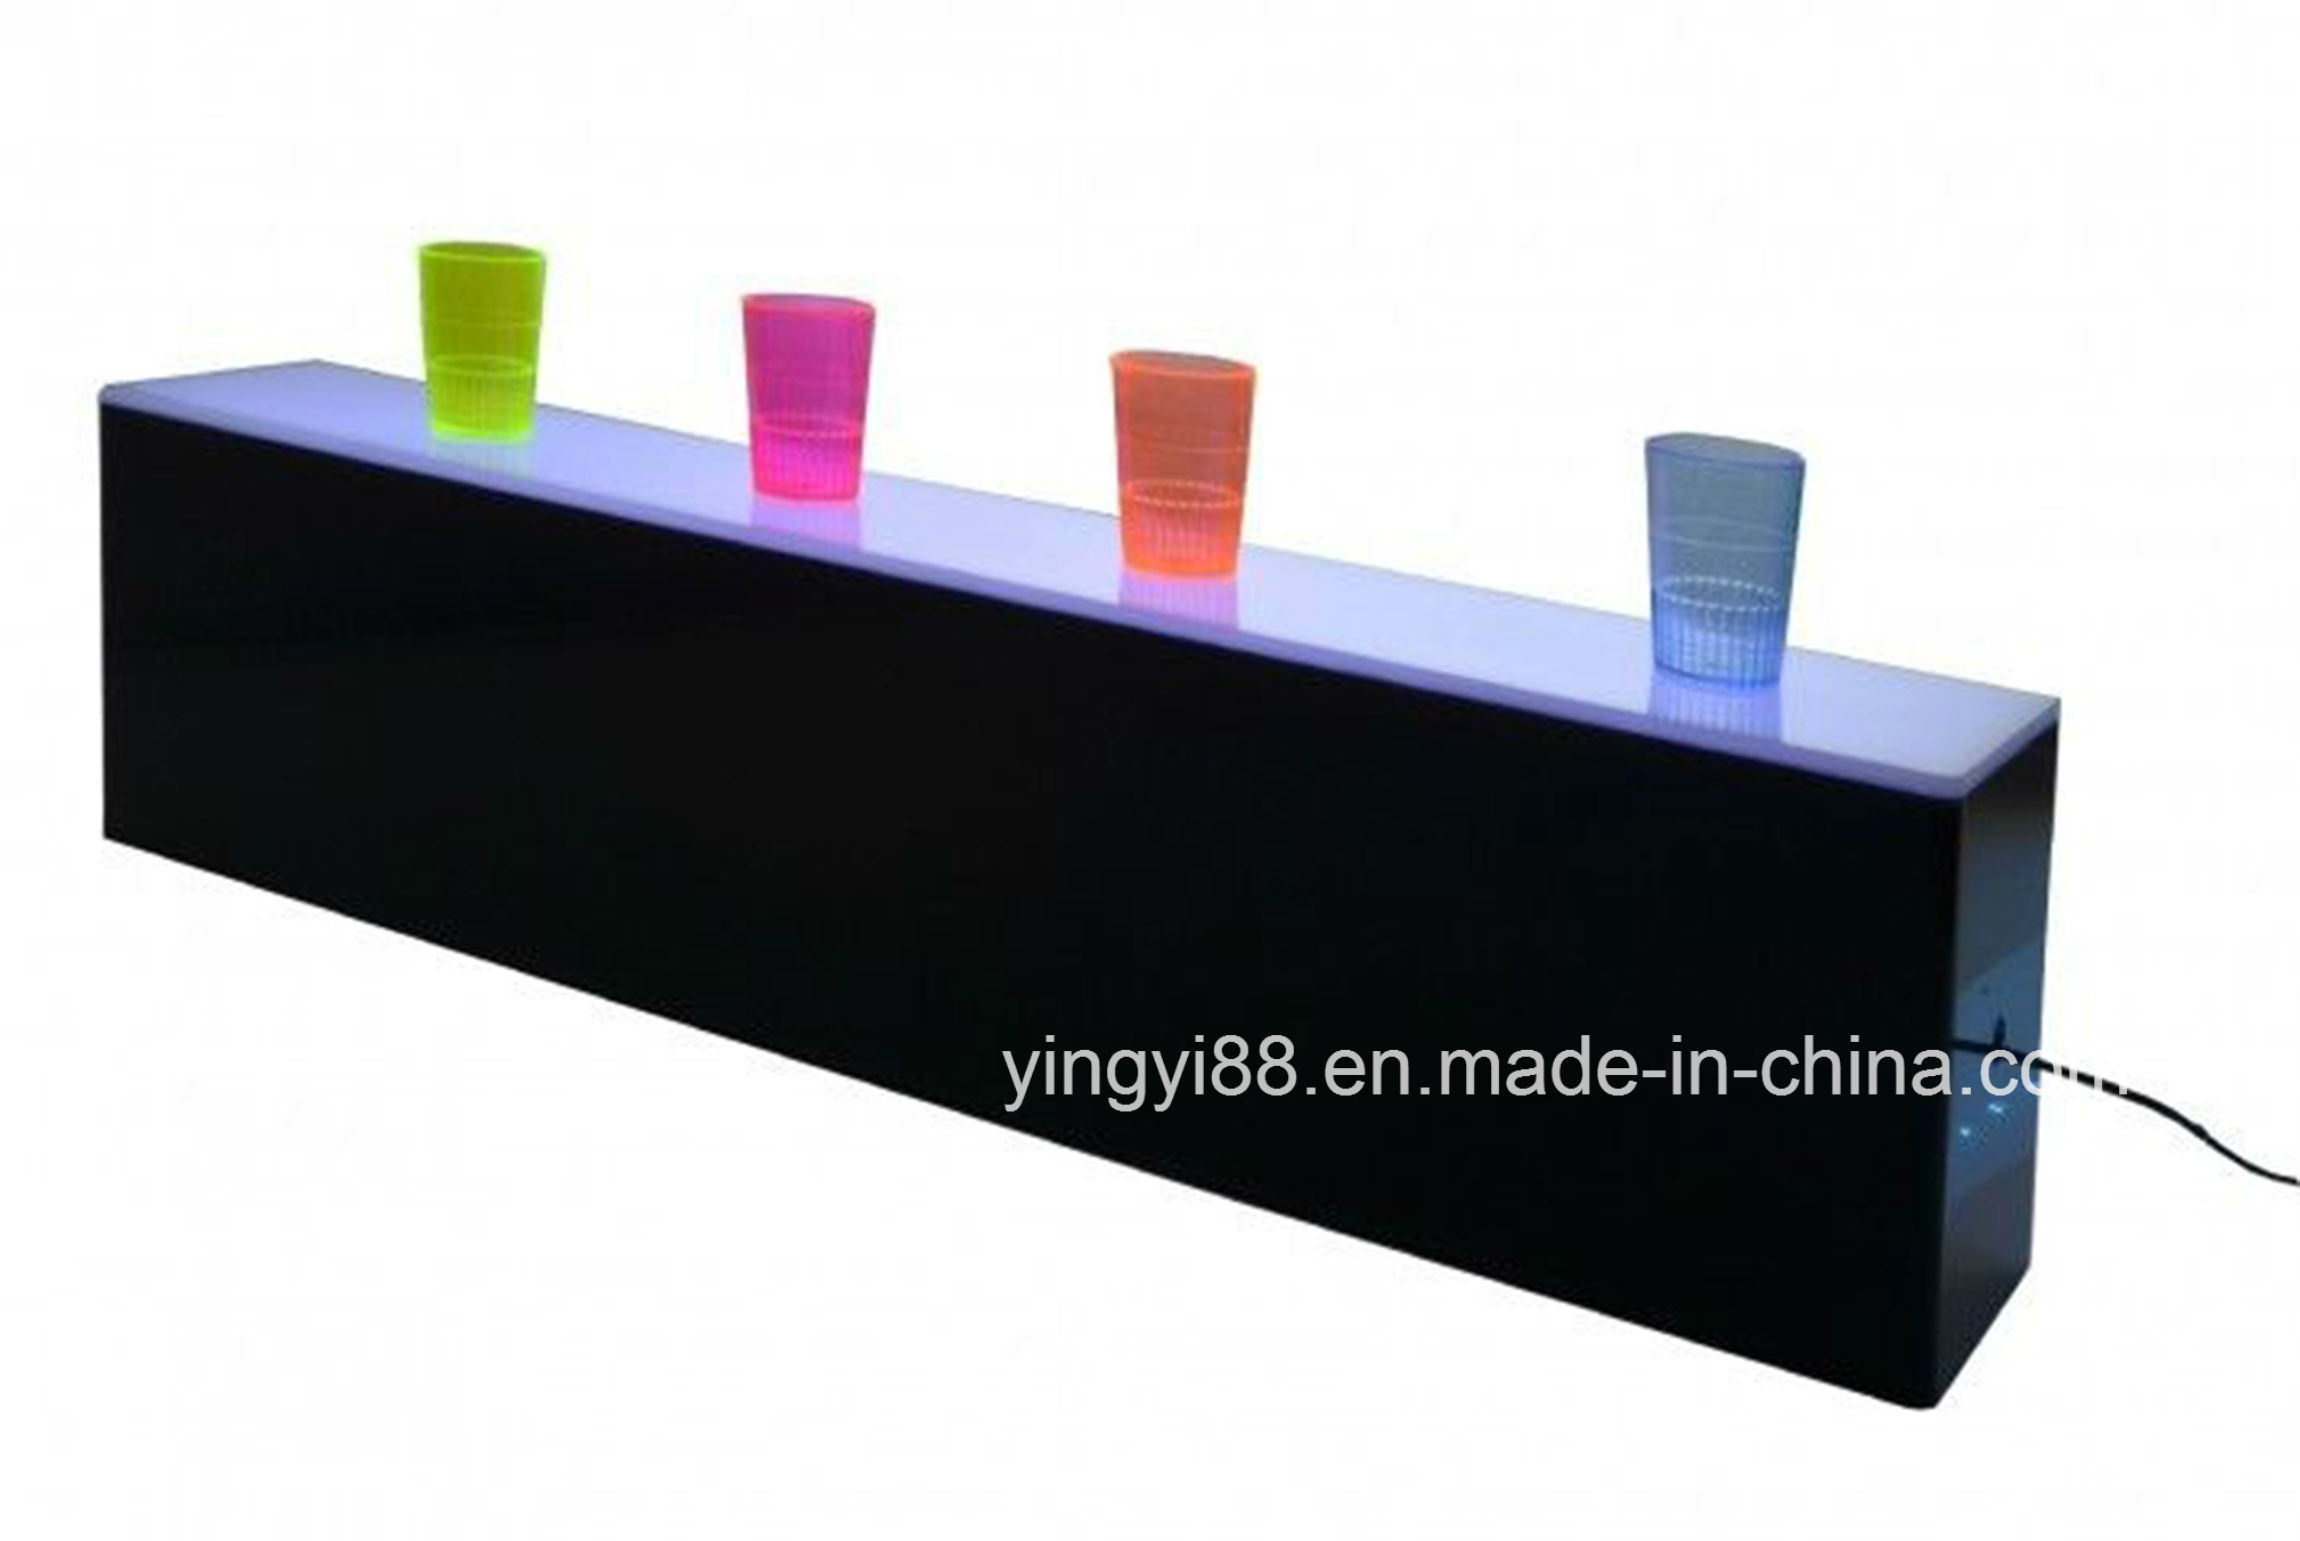 /proimages/2f0j00NJDtiFyBNnkm/black-acrylic-led-lighted-liquor-bottle-display-shelf.jpg